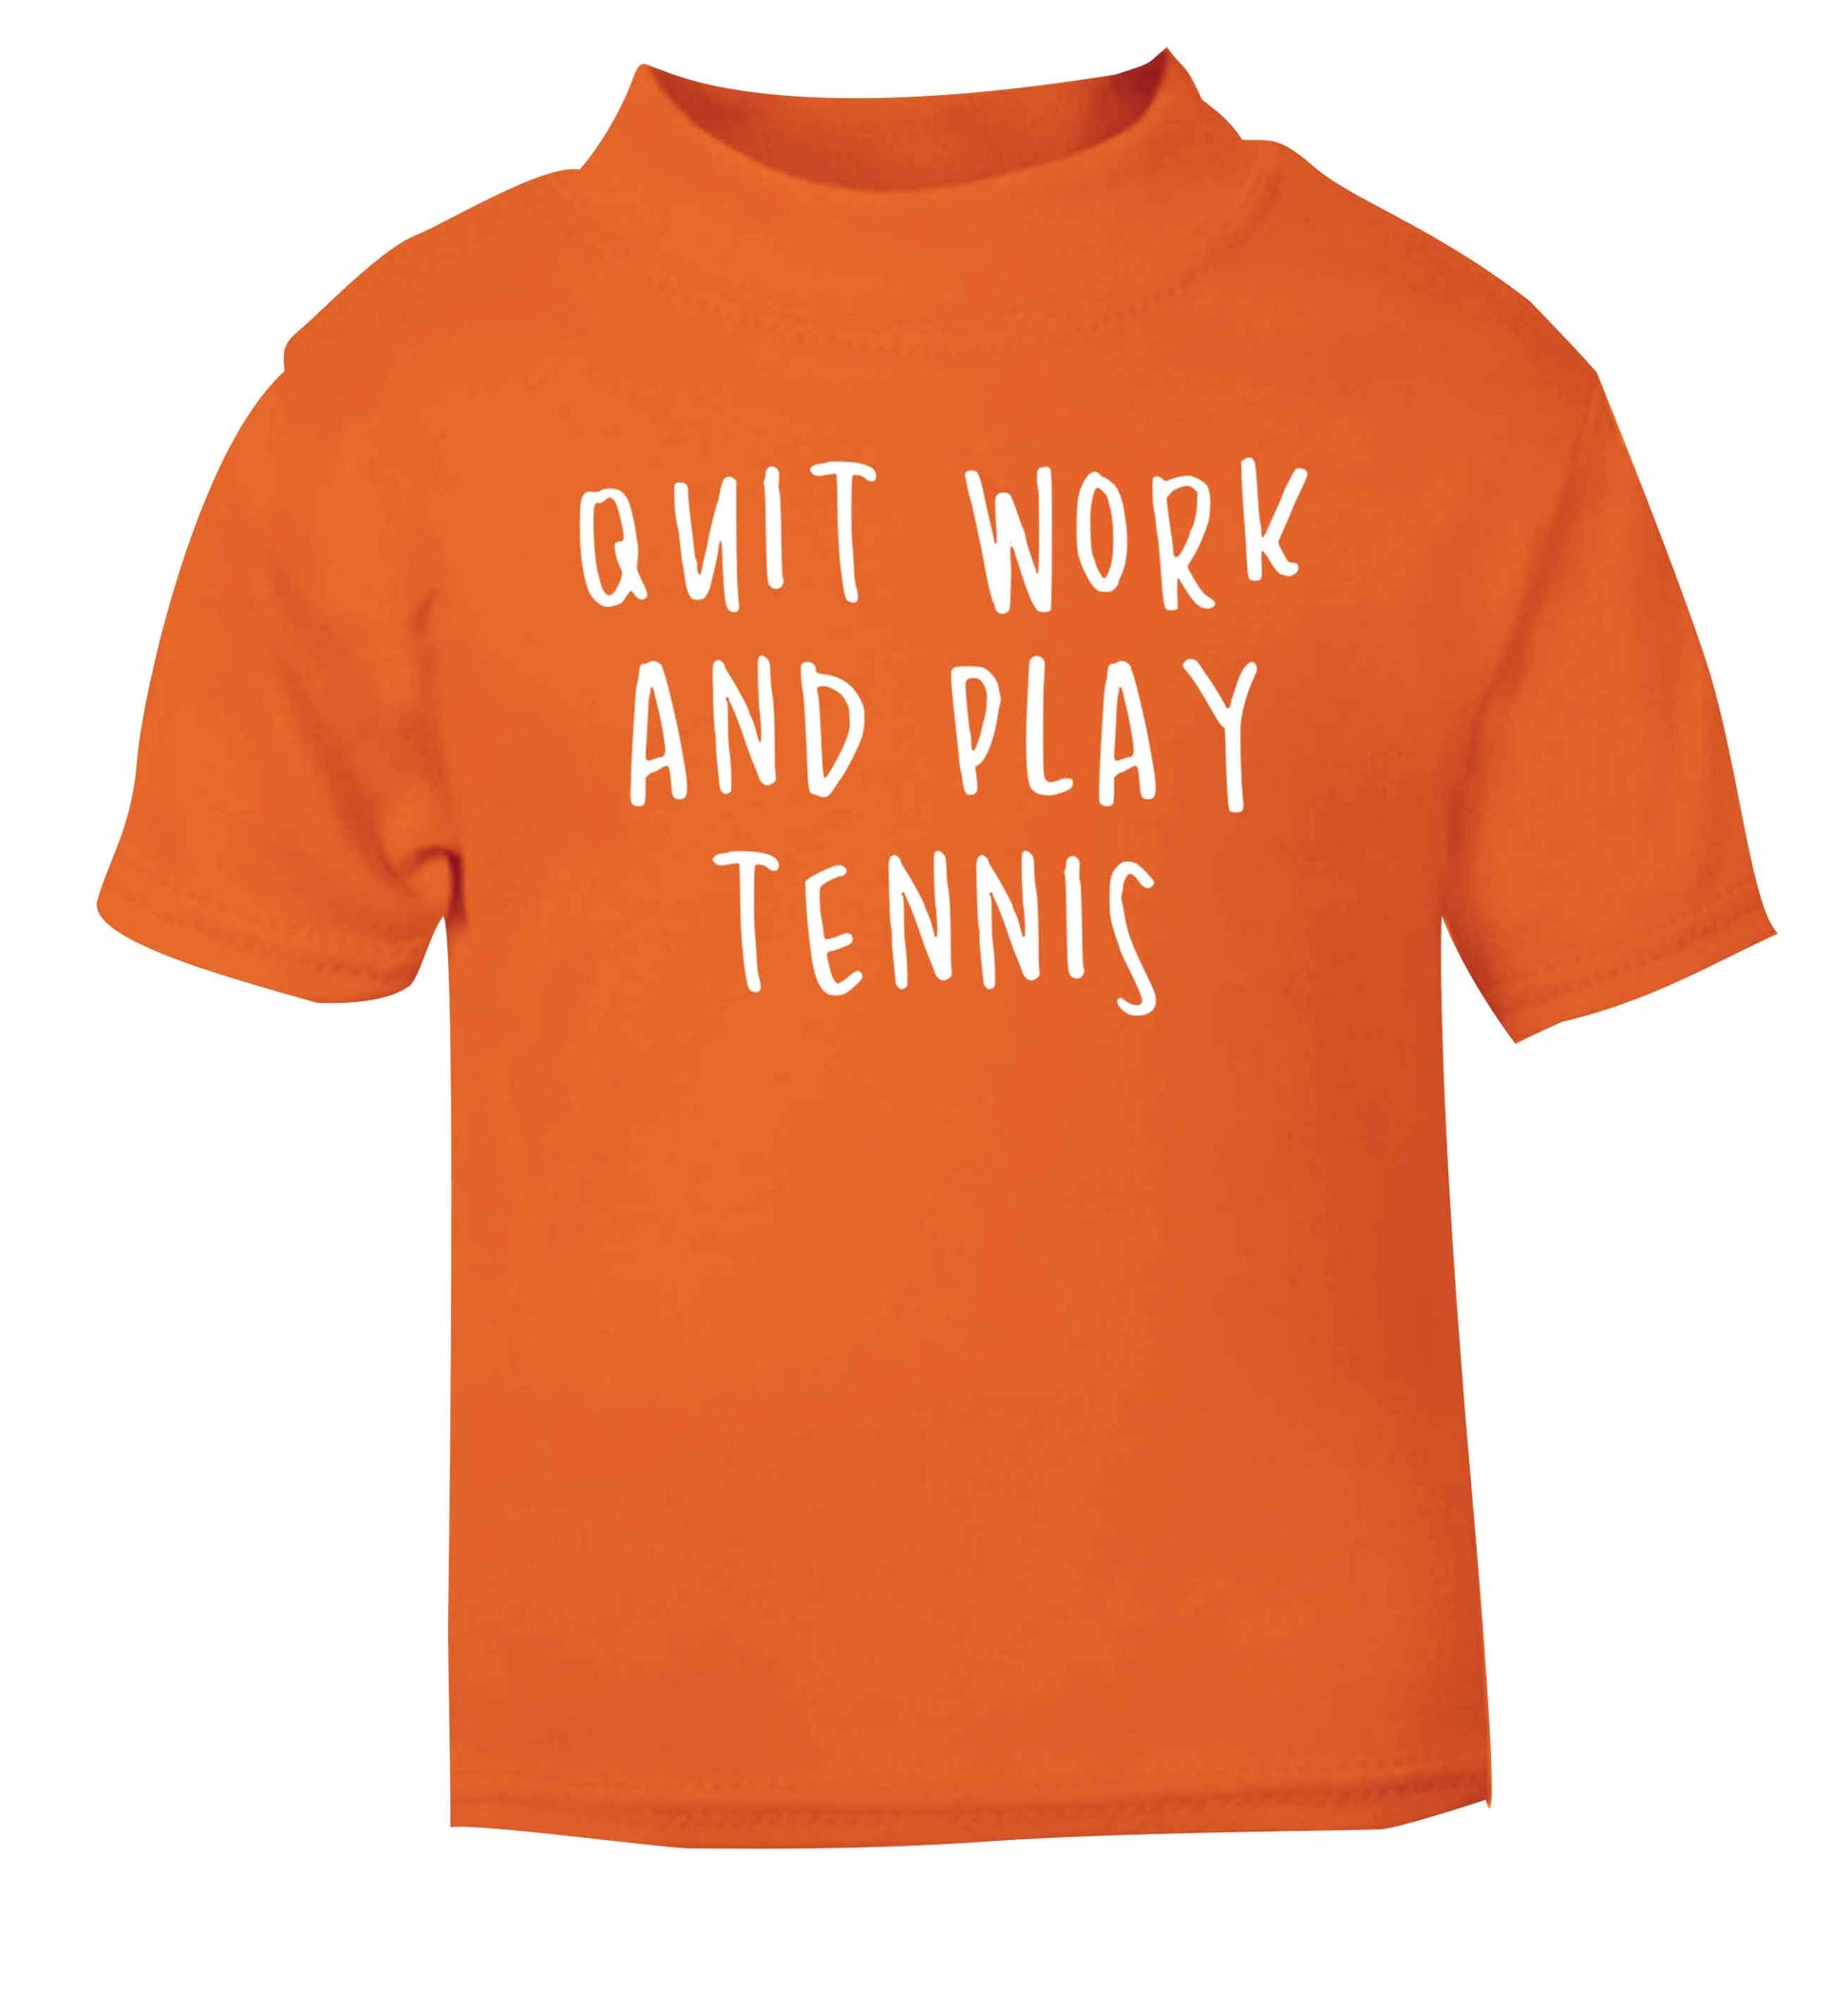 Quit work and play tennis orange Baby Toddler Tshirt 2 Years